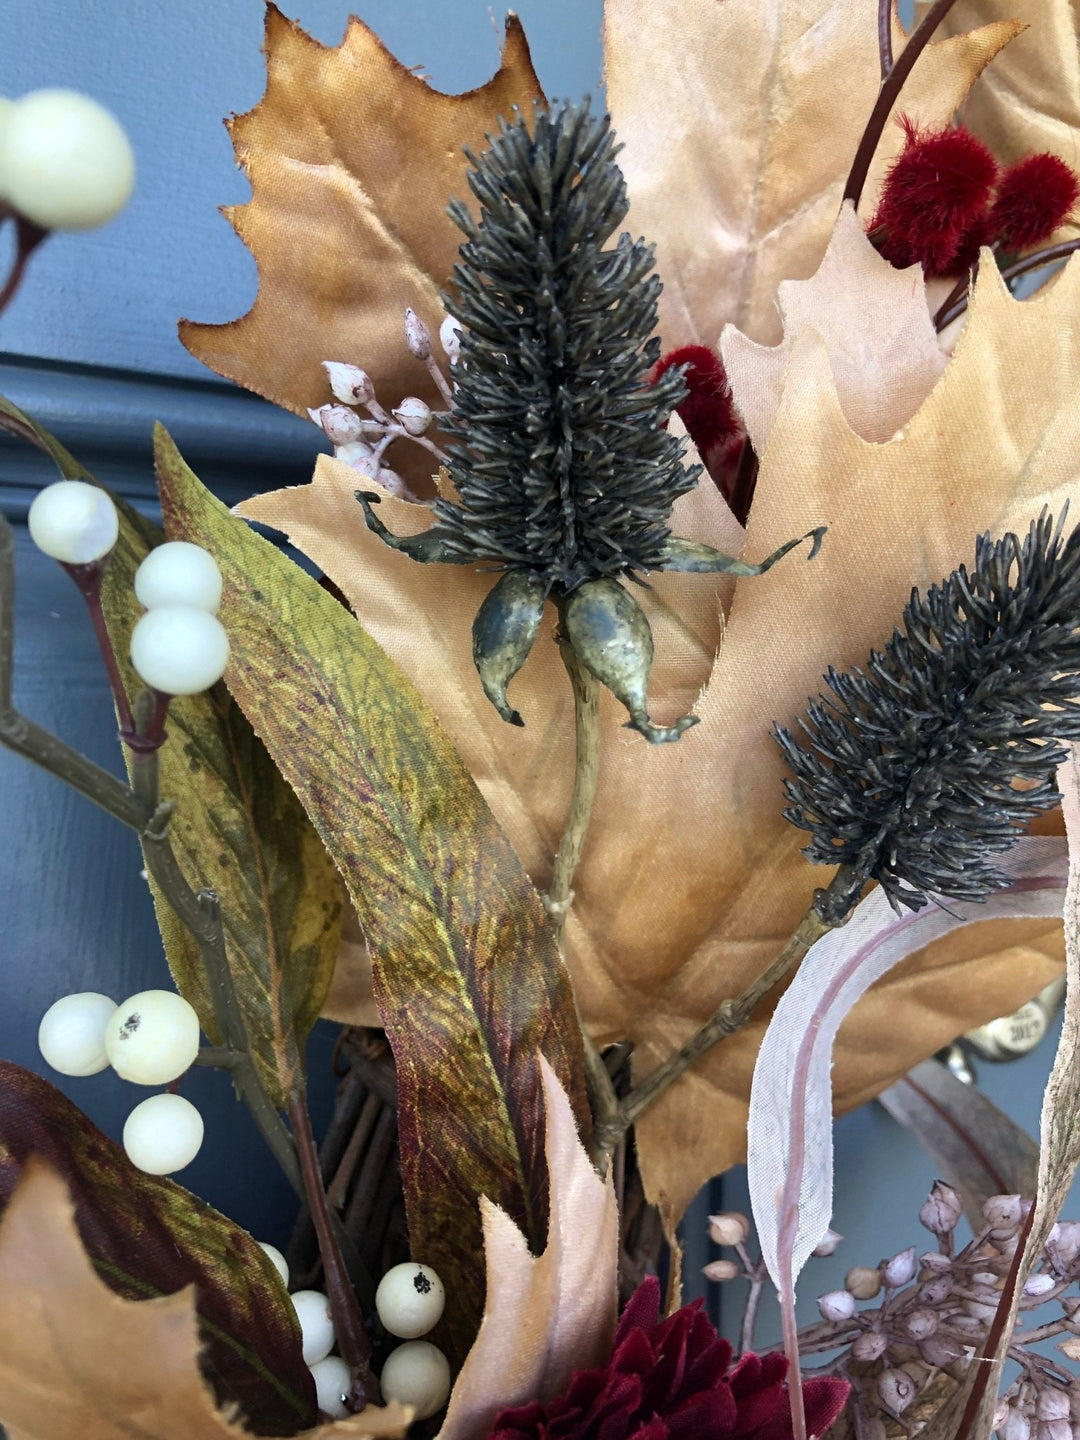 Fall boho beige maple leaf front door wreath